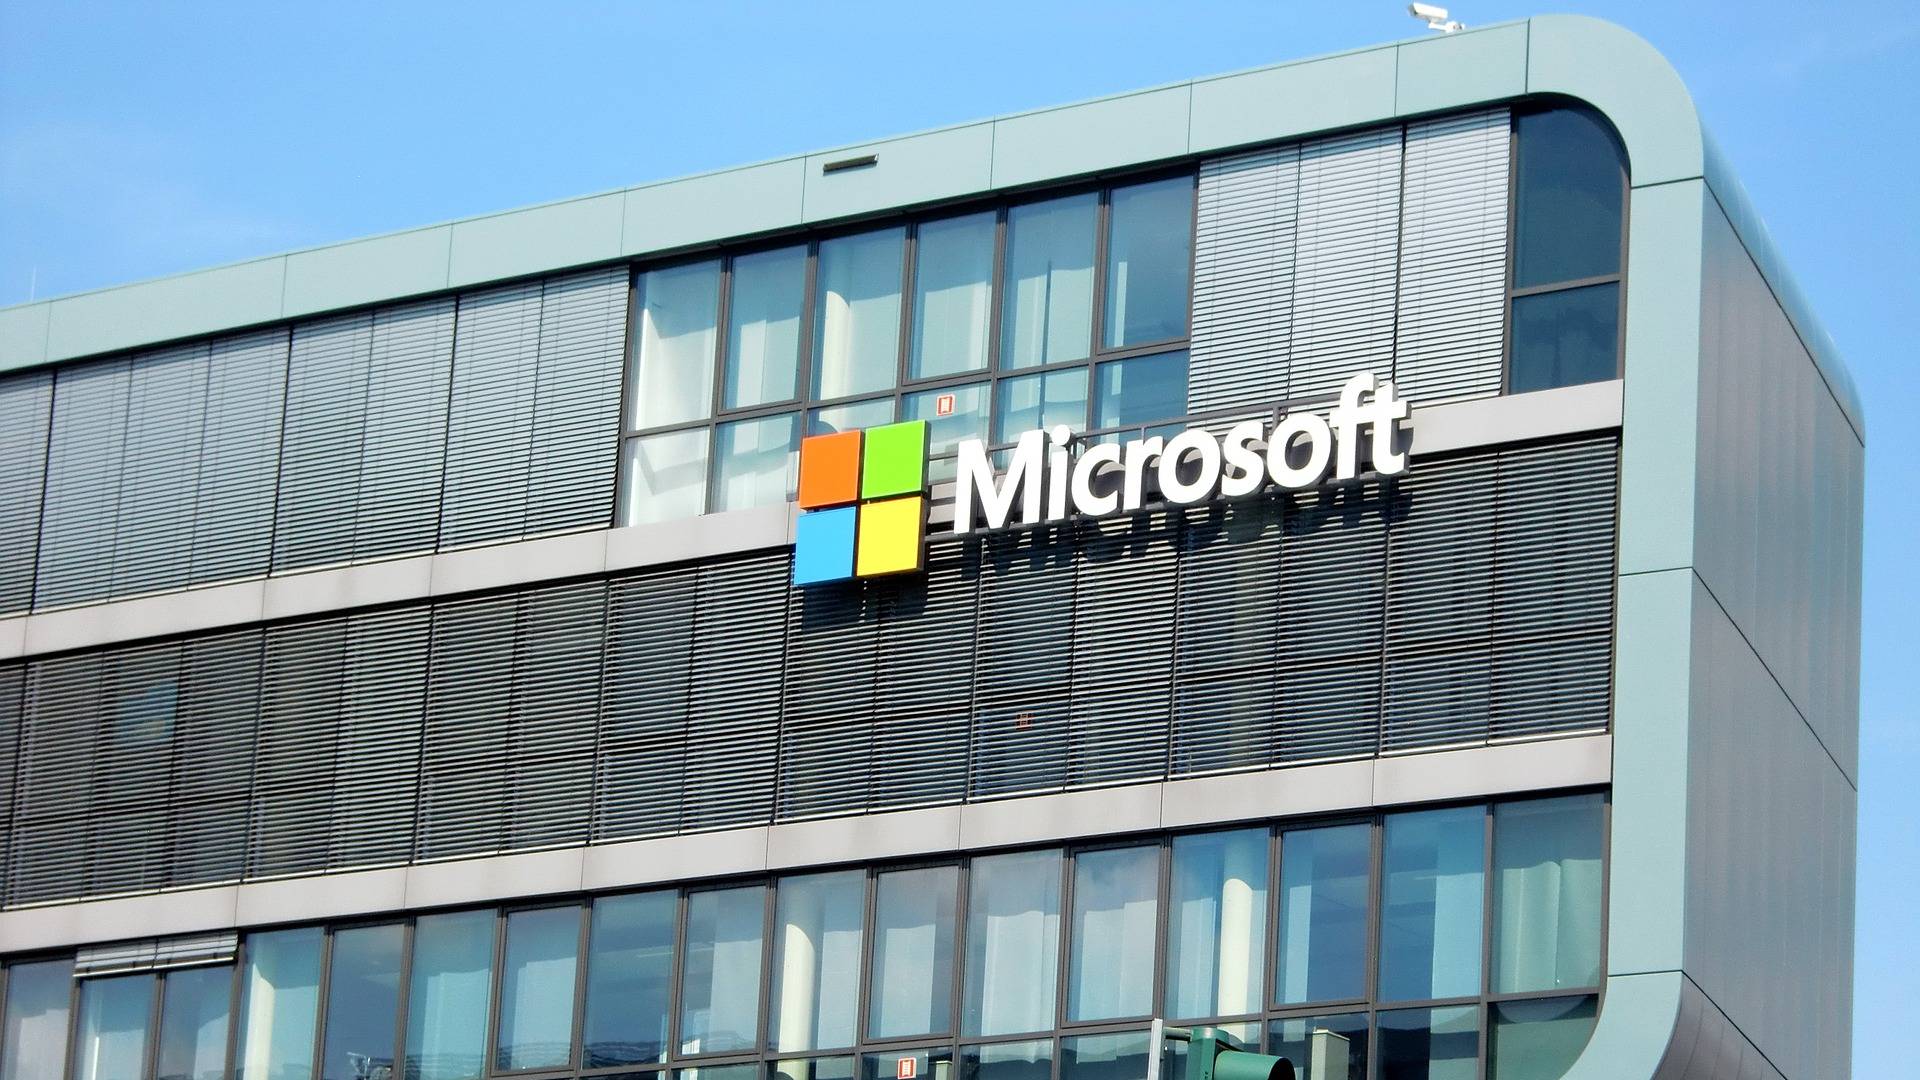 Centro Microsoft GMAIL para ataques cibernéticos extremadamente peligrosos